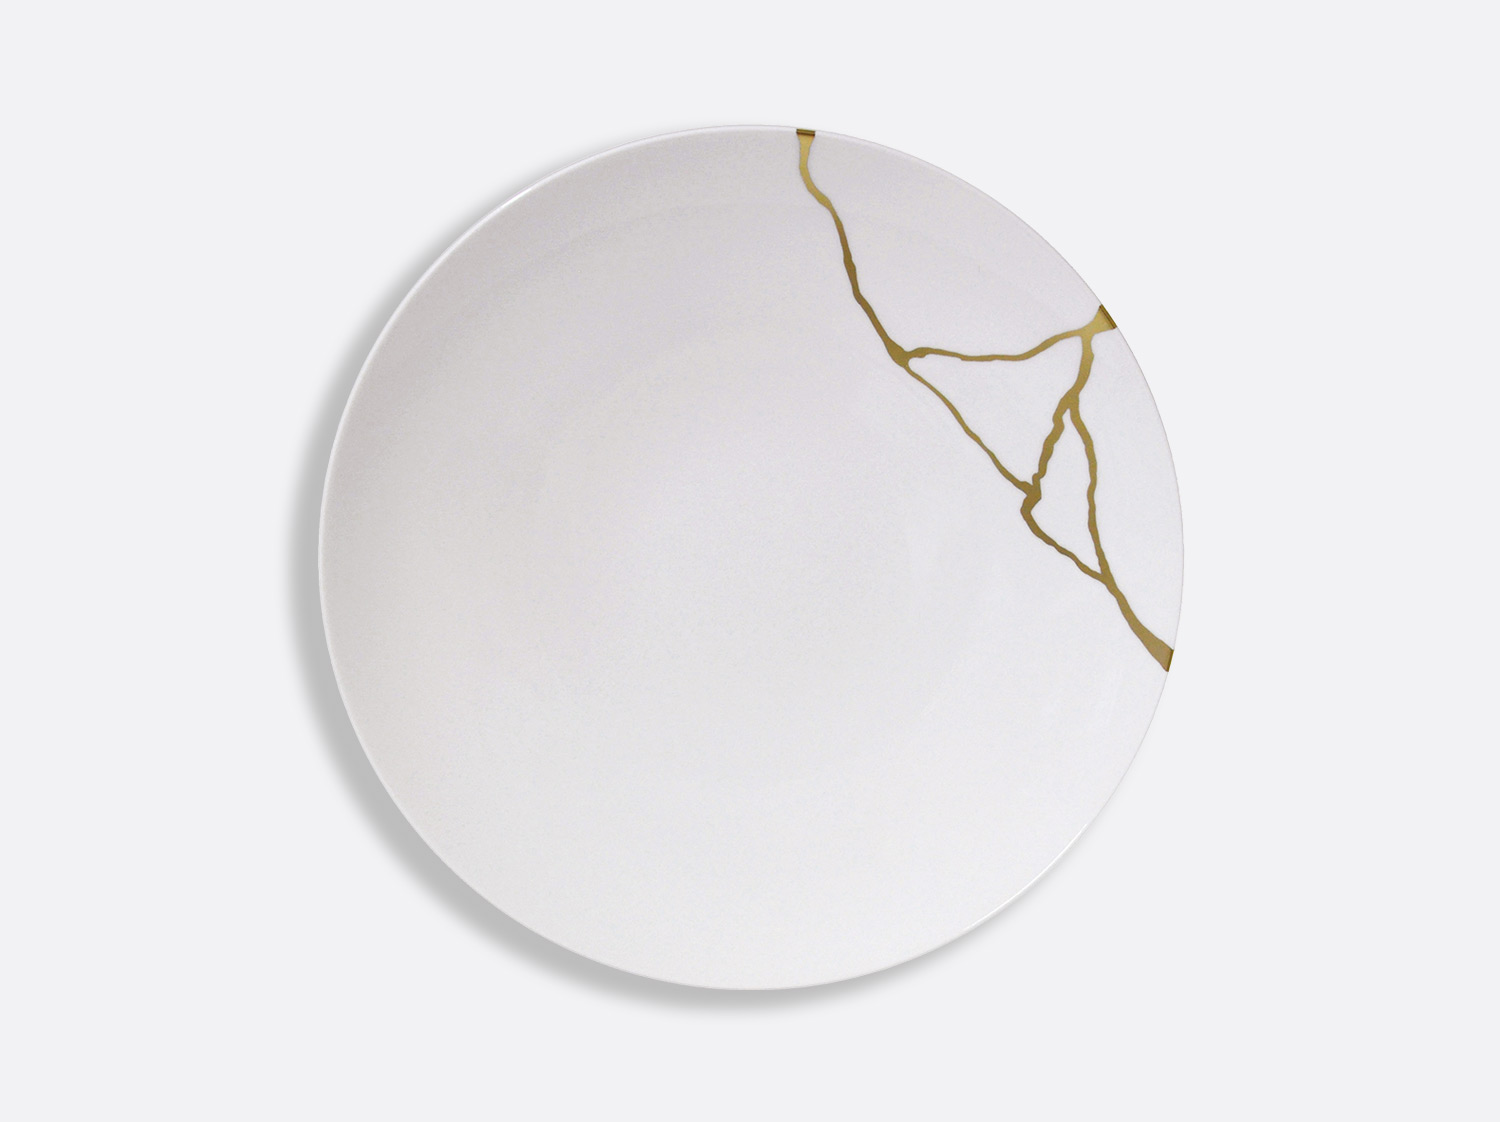 China Coupe dinner plate 10.6" of the collection Kintsugi | Bernardaud